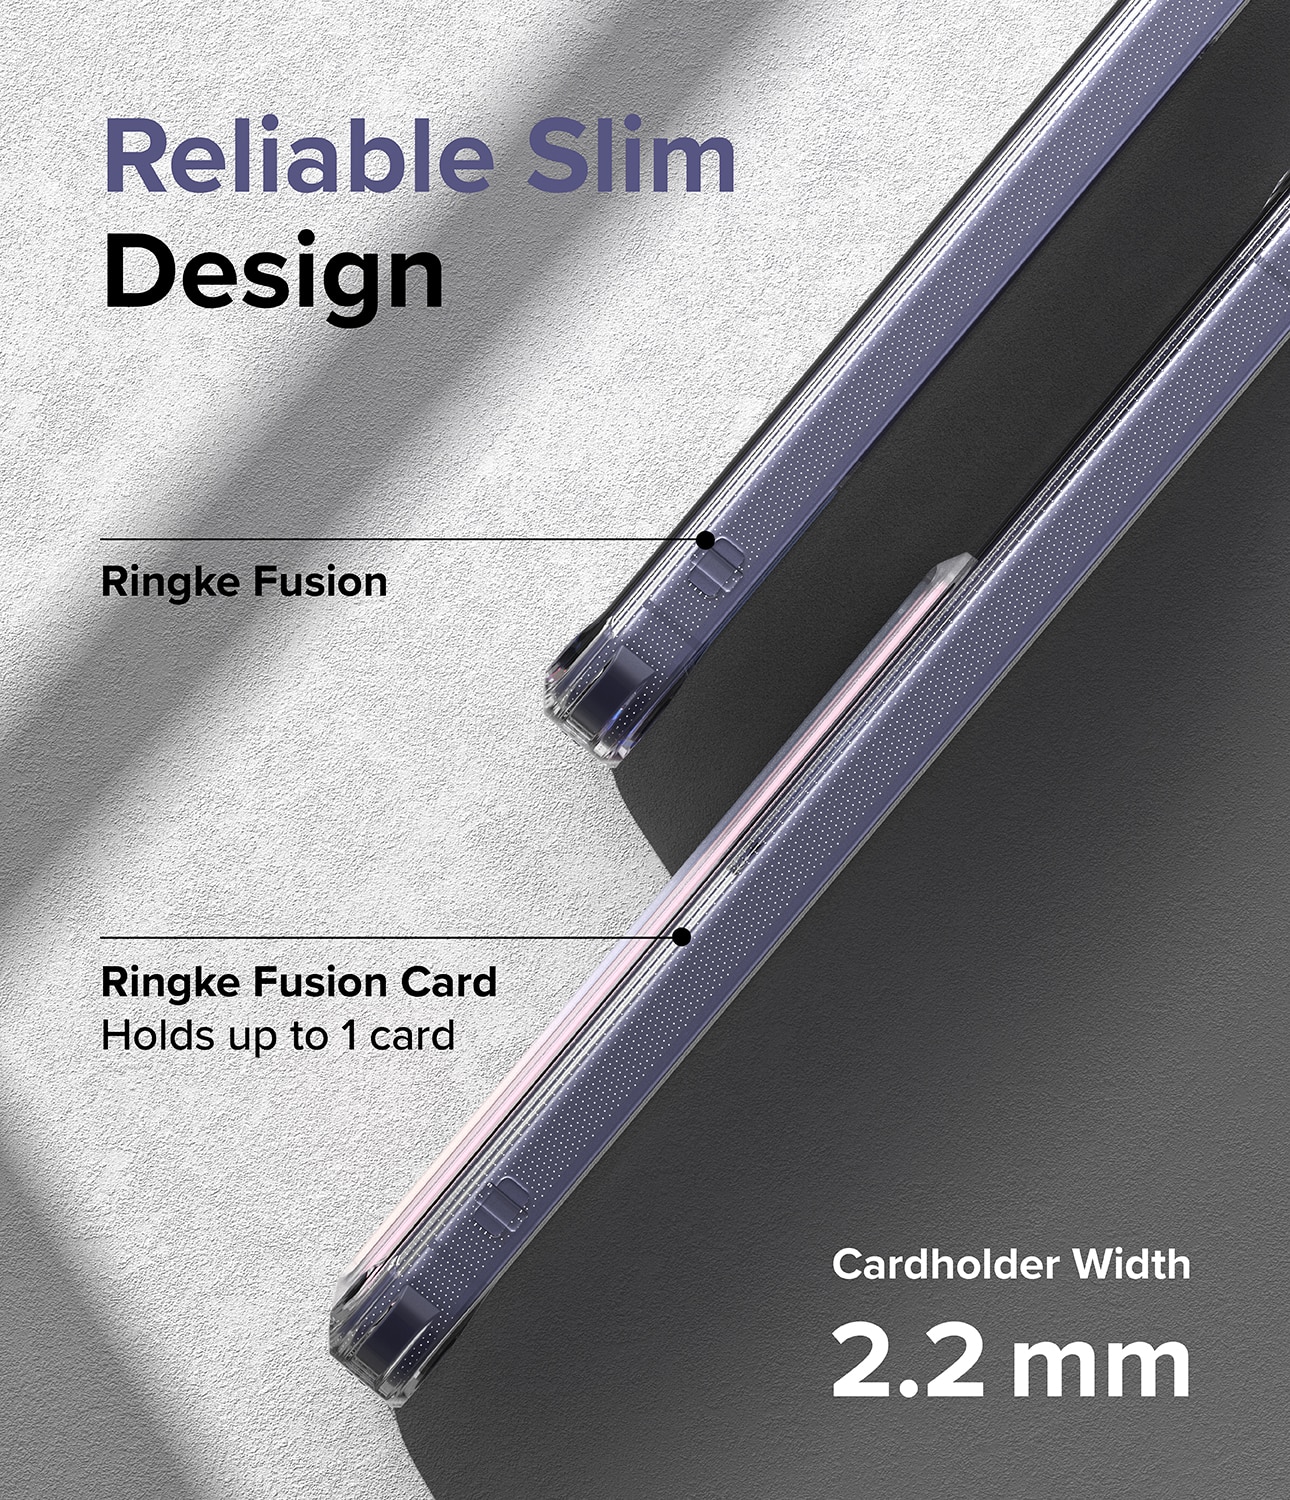 Coque Fusion Card Samsung Galaxy S24 Plus, transparent